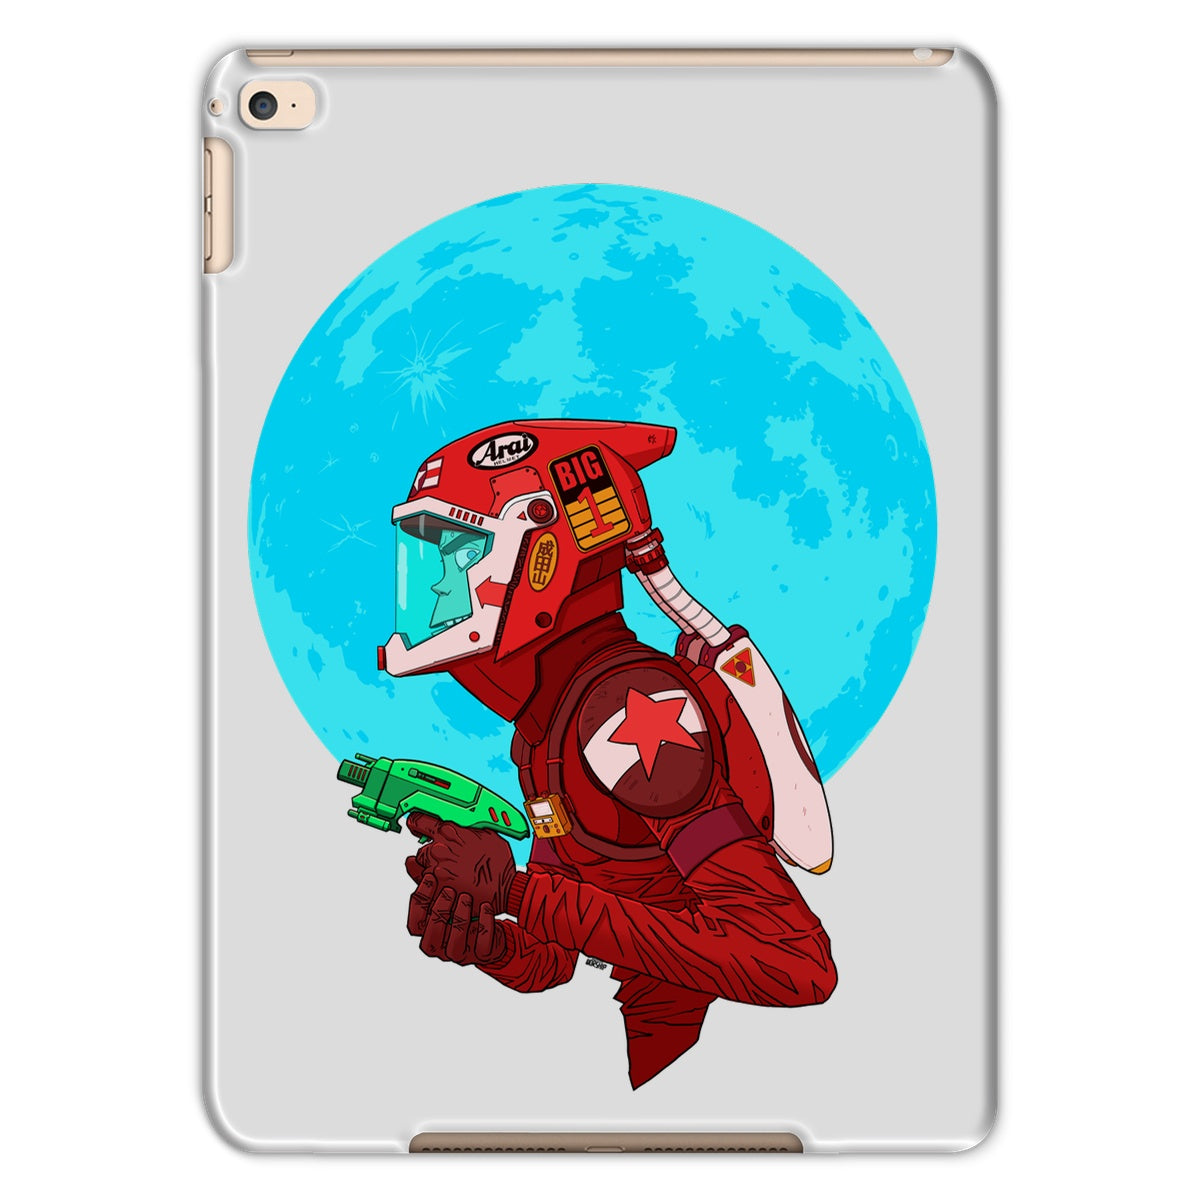 Unique and cool Gorillaz-style Sci-Fi retro Tablet Case illustration 